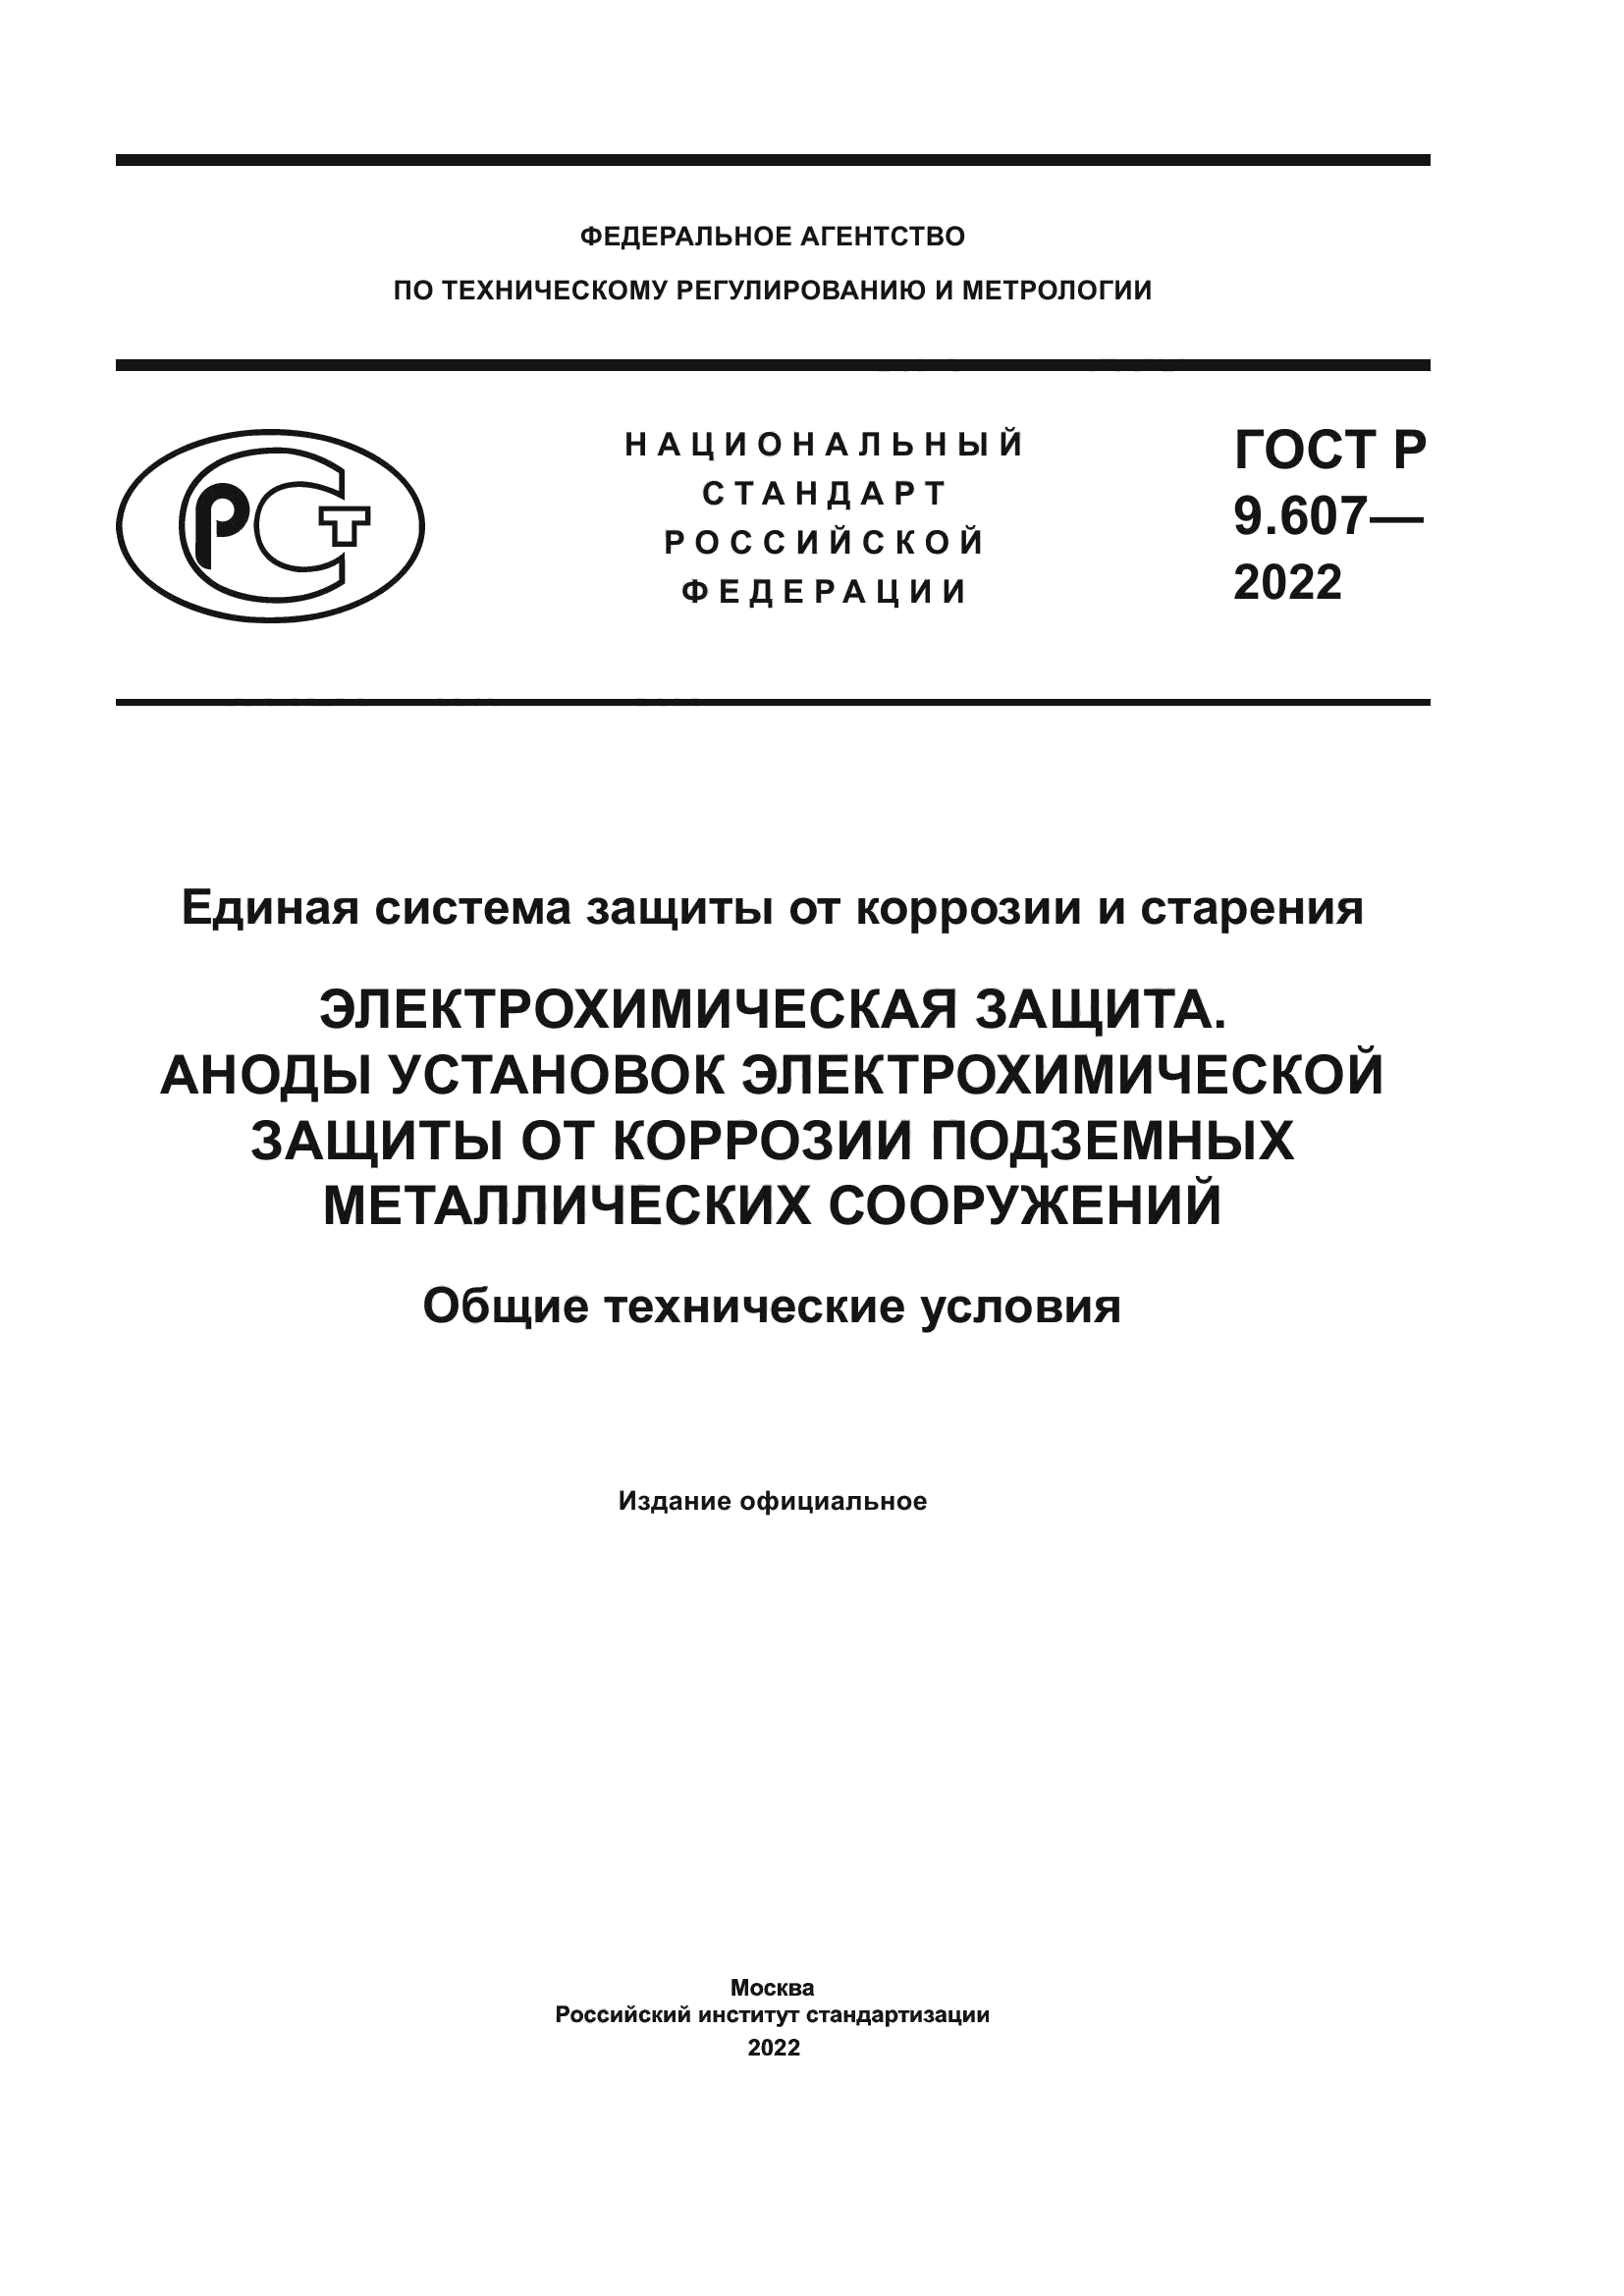 ГОСТ Р 9.607-2022